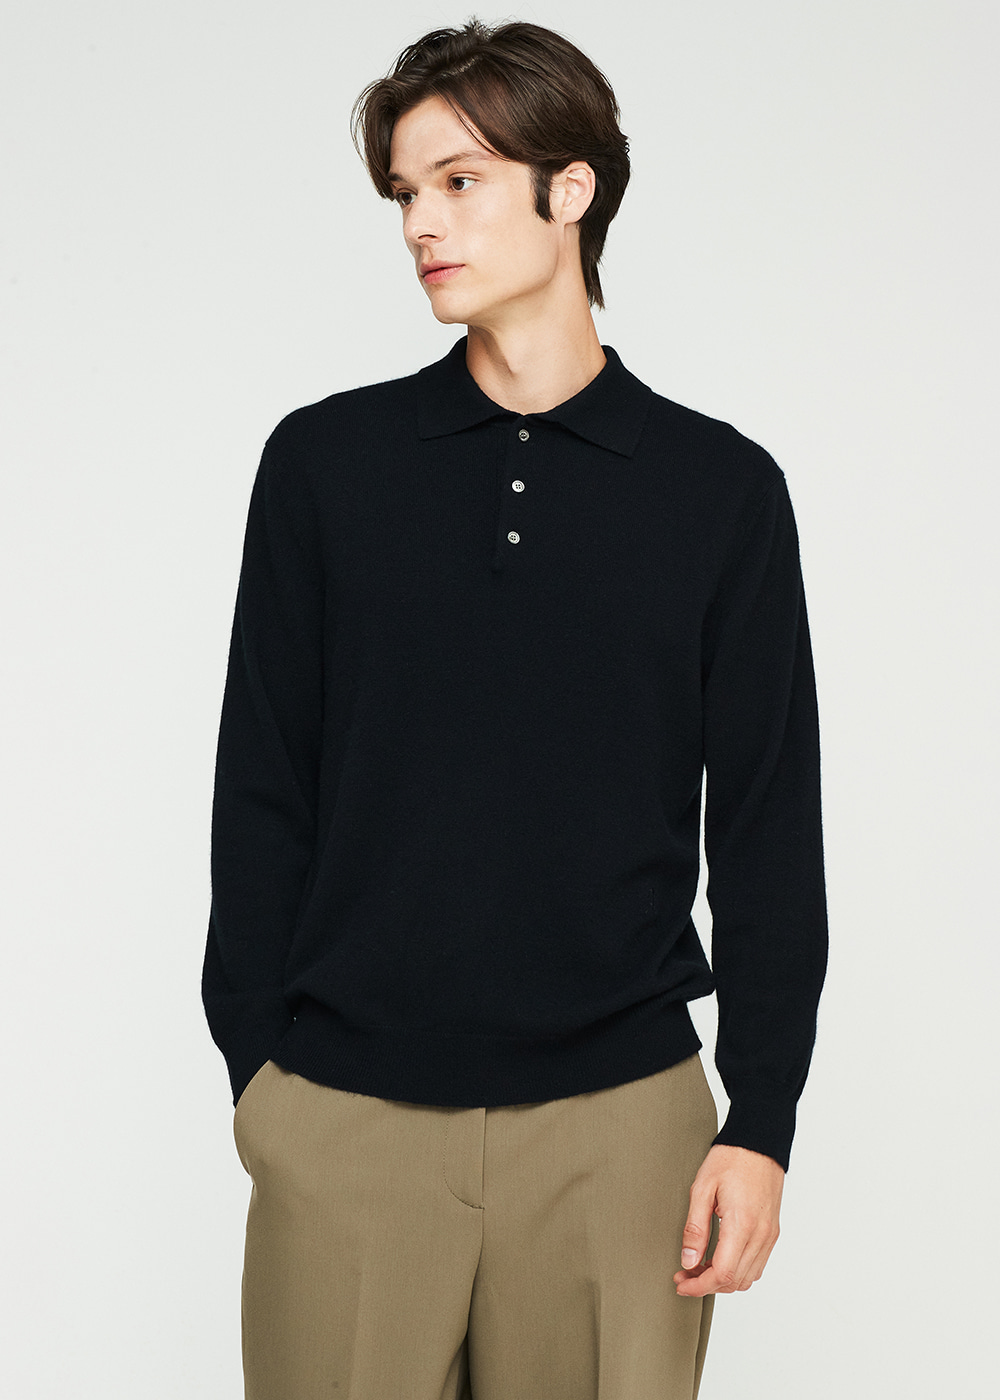 A LOGO shirt pullover (black)  20%